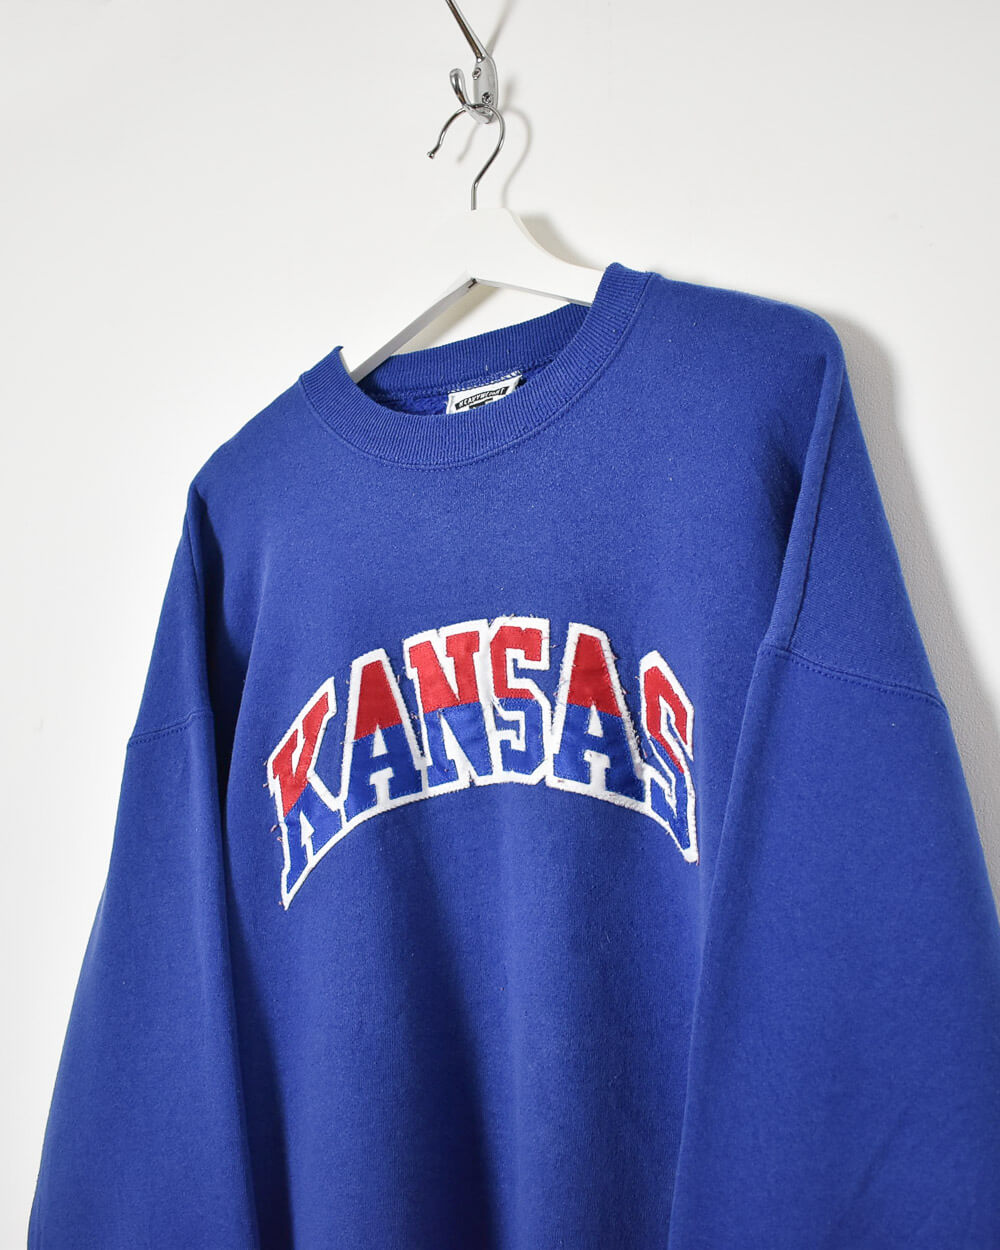 Lee Heavyweight Kansas Sweatshirt - Large - Domno Vintage 90s, 80s, 00s Retro and Vintage Clothing 